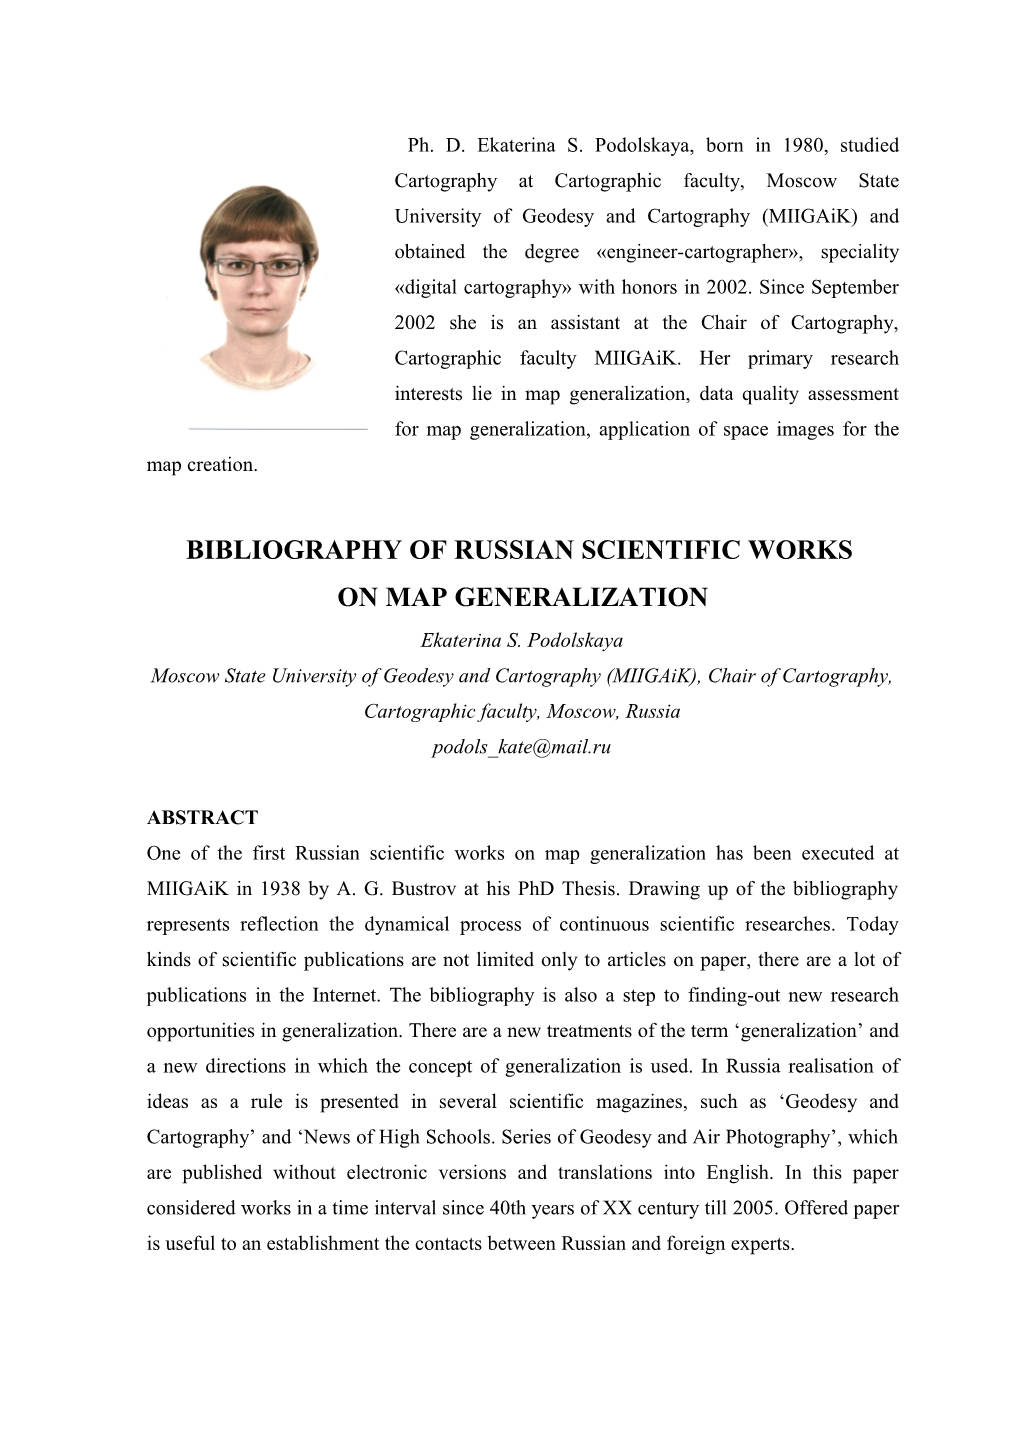 Bibliography of Russian Scientific Works on Map Generalization